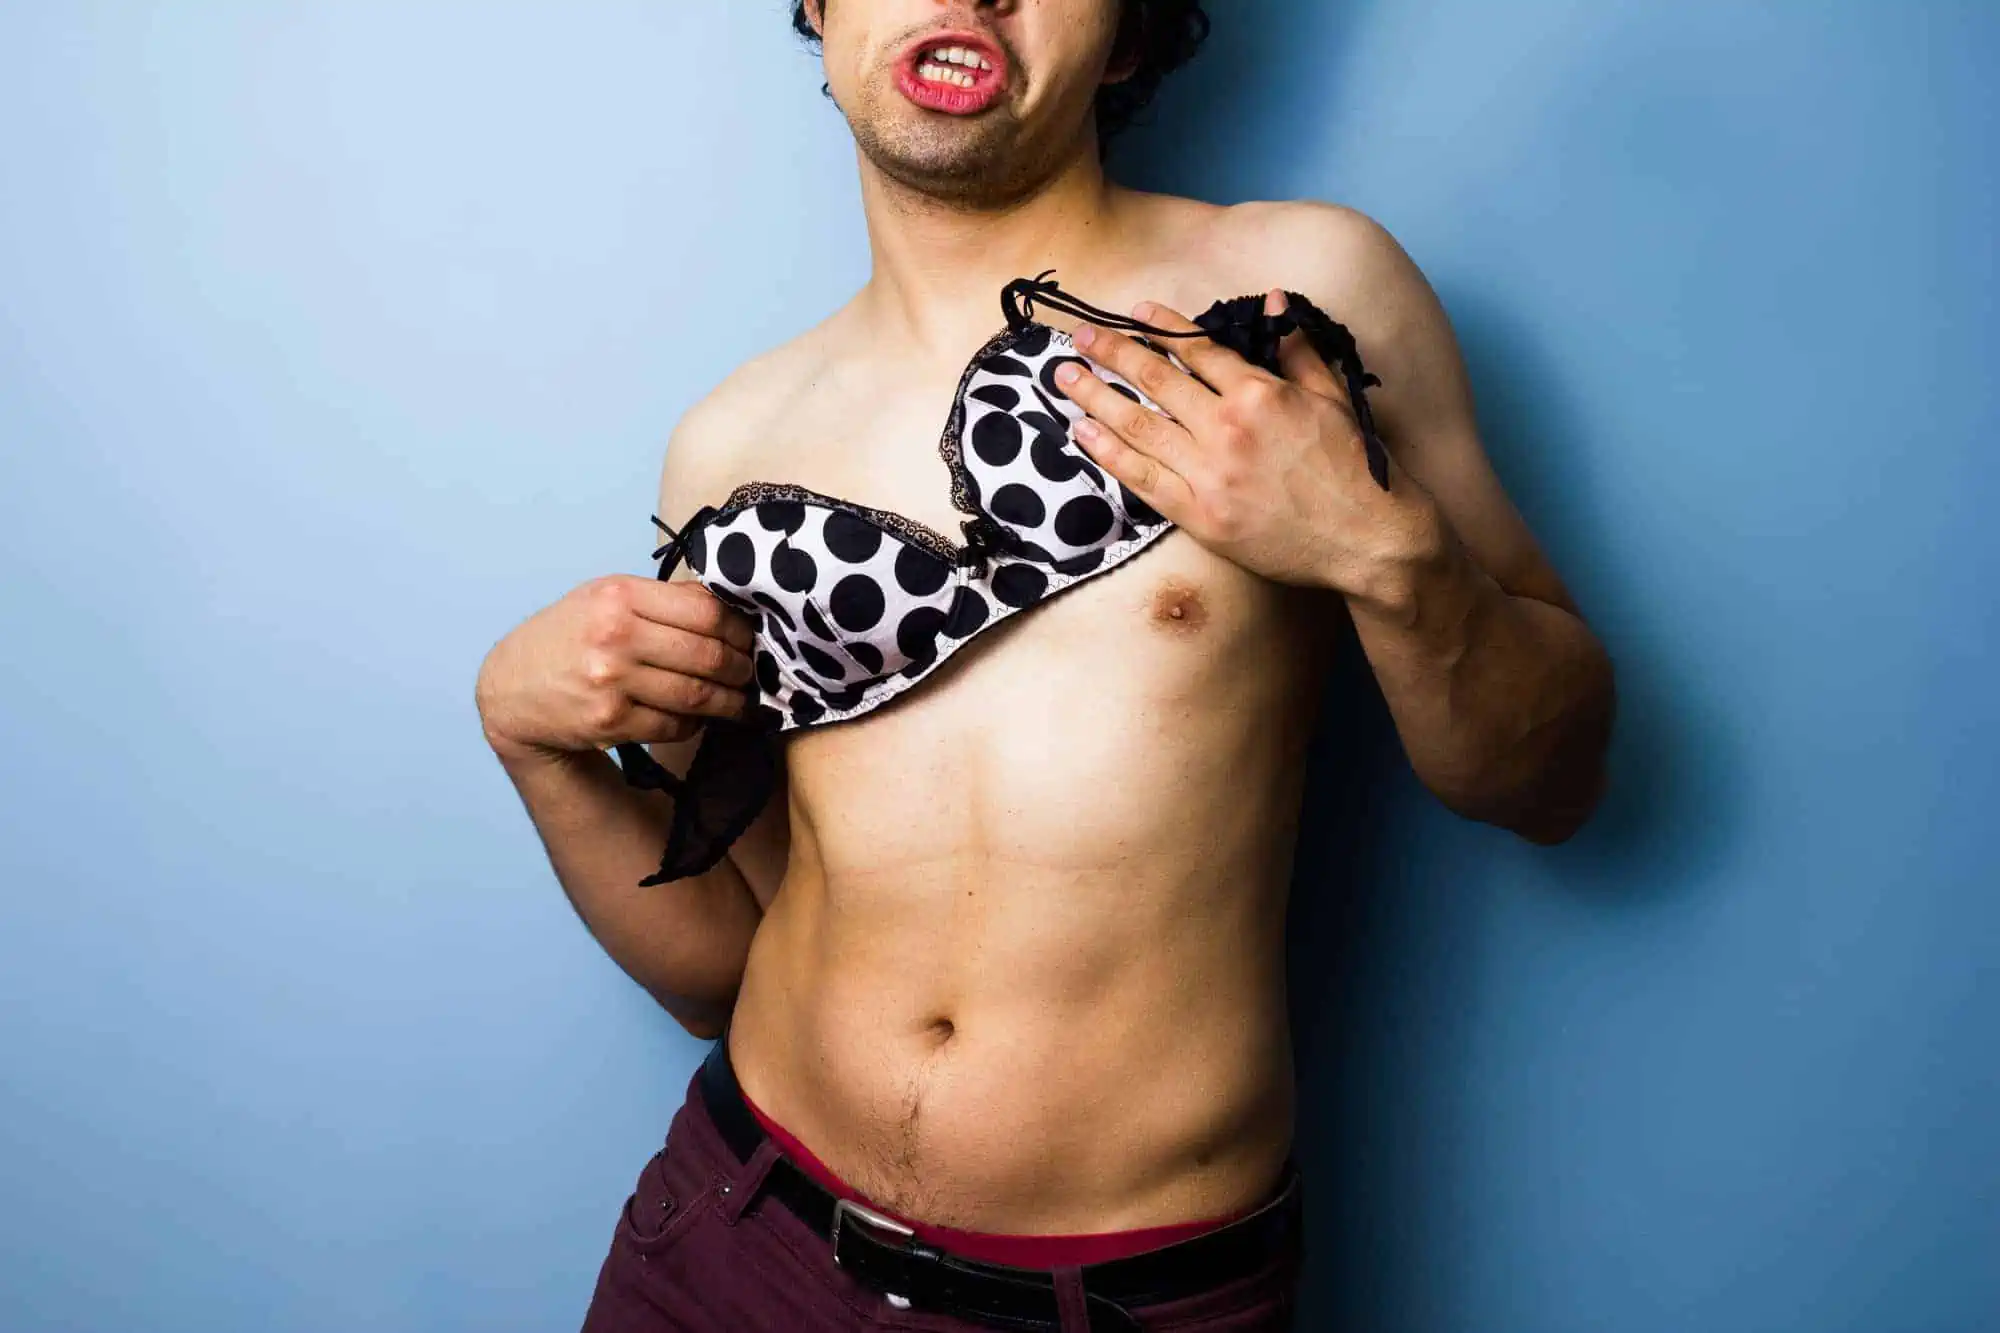 A shirtless man with a polka dot bra